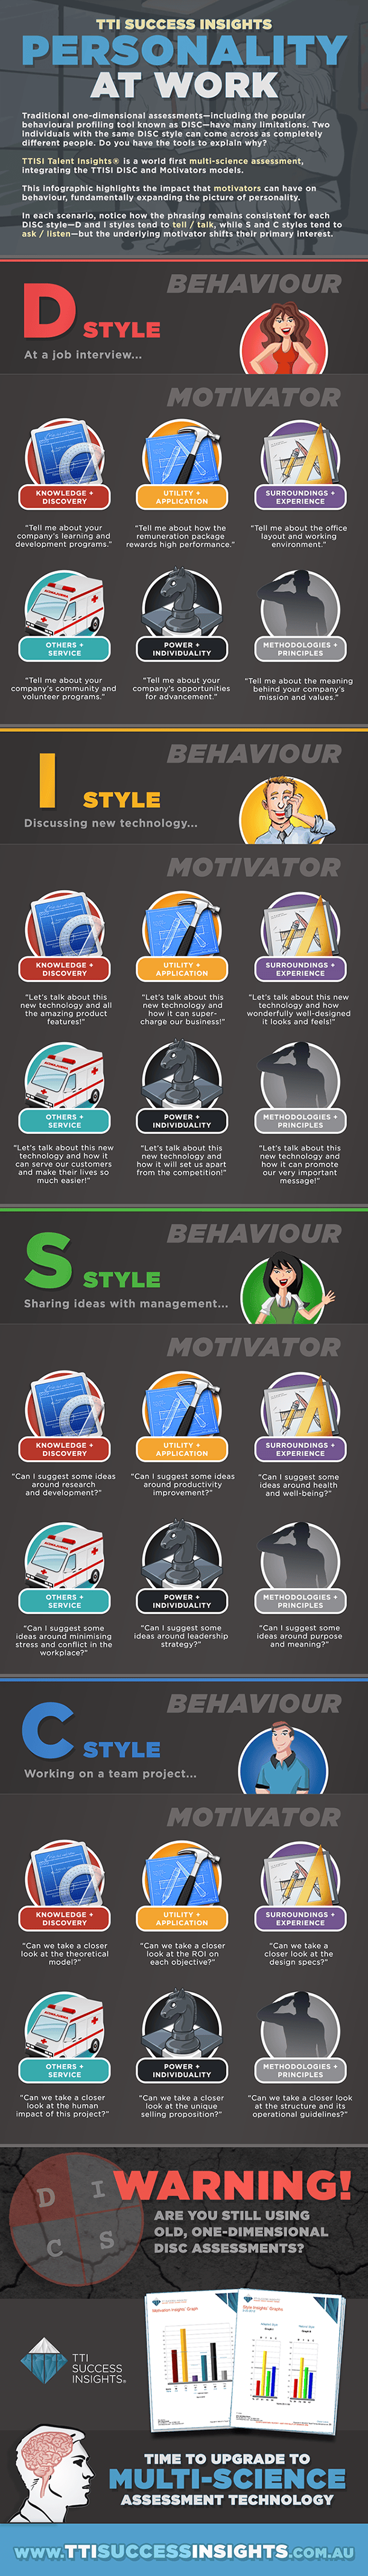 DISC & Motivators - Personality Infographic